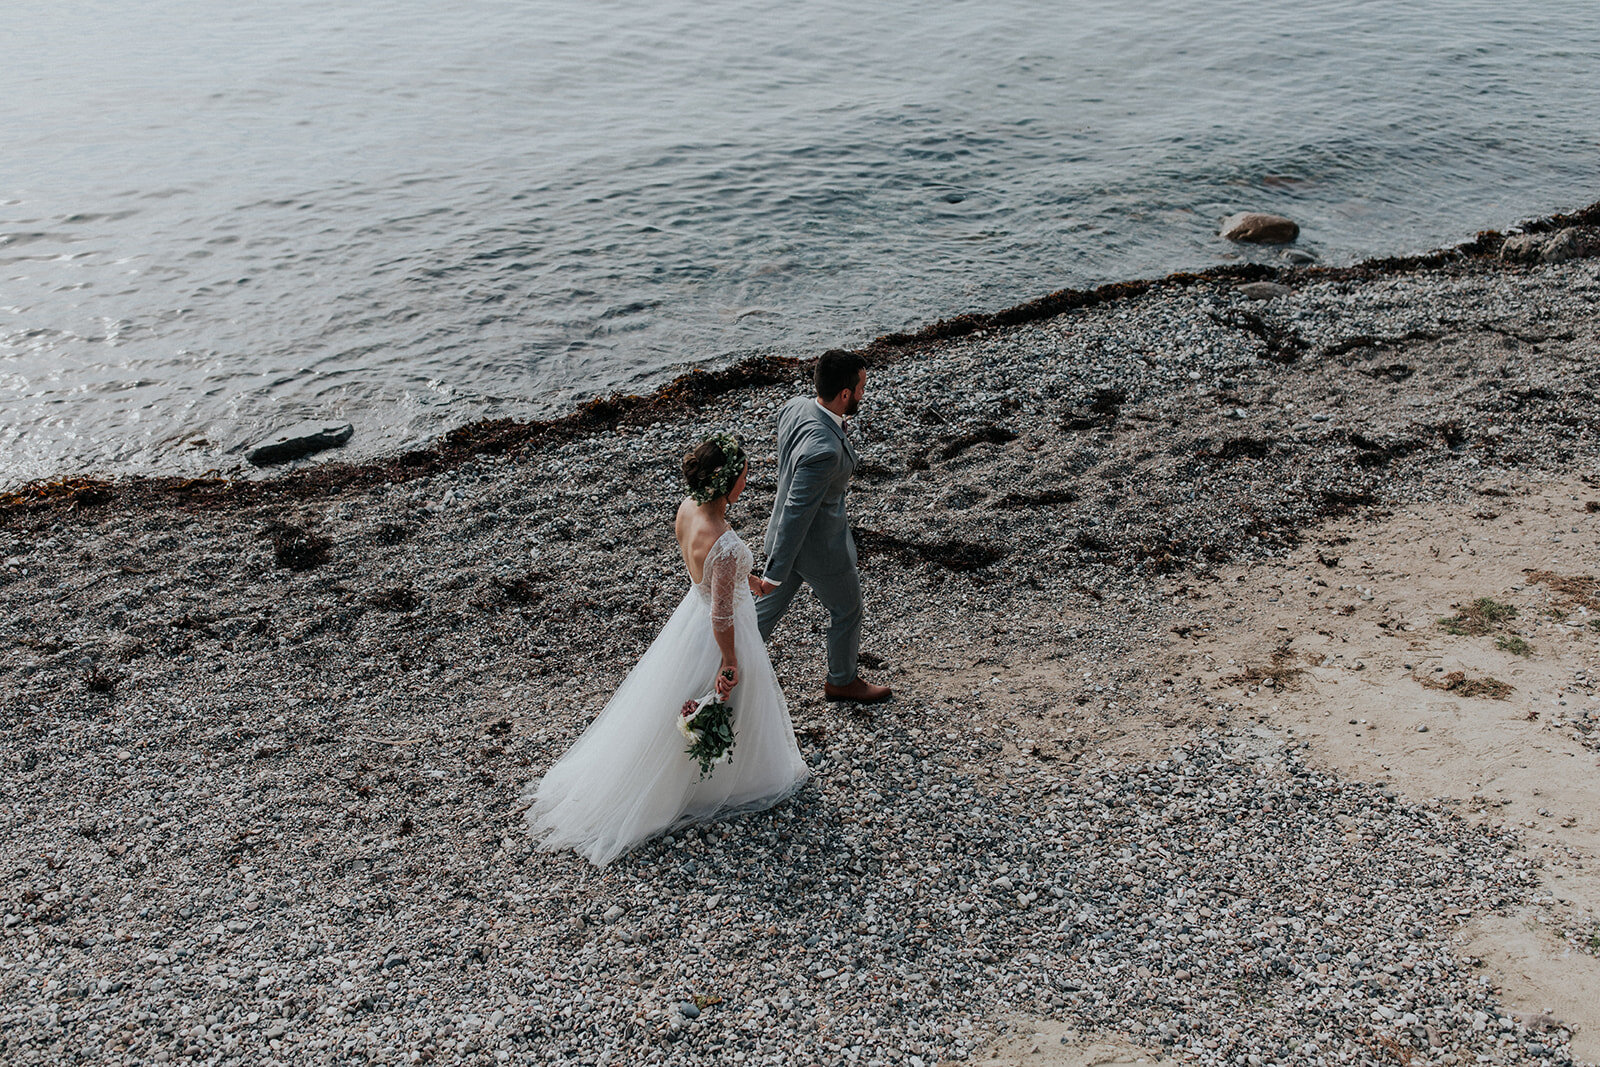 bride and groom at intimate rustic wedding ceremony - aero island, denmark - full service wedding planners - danish island weddings